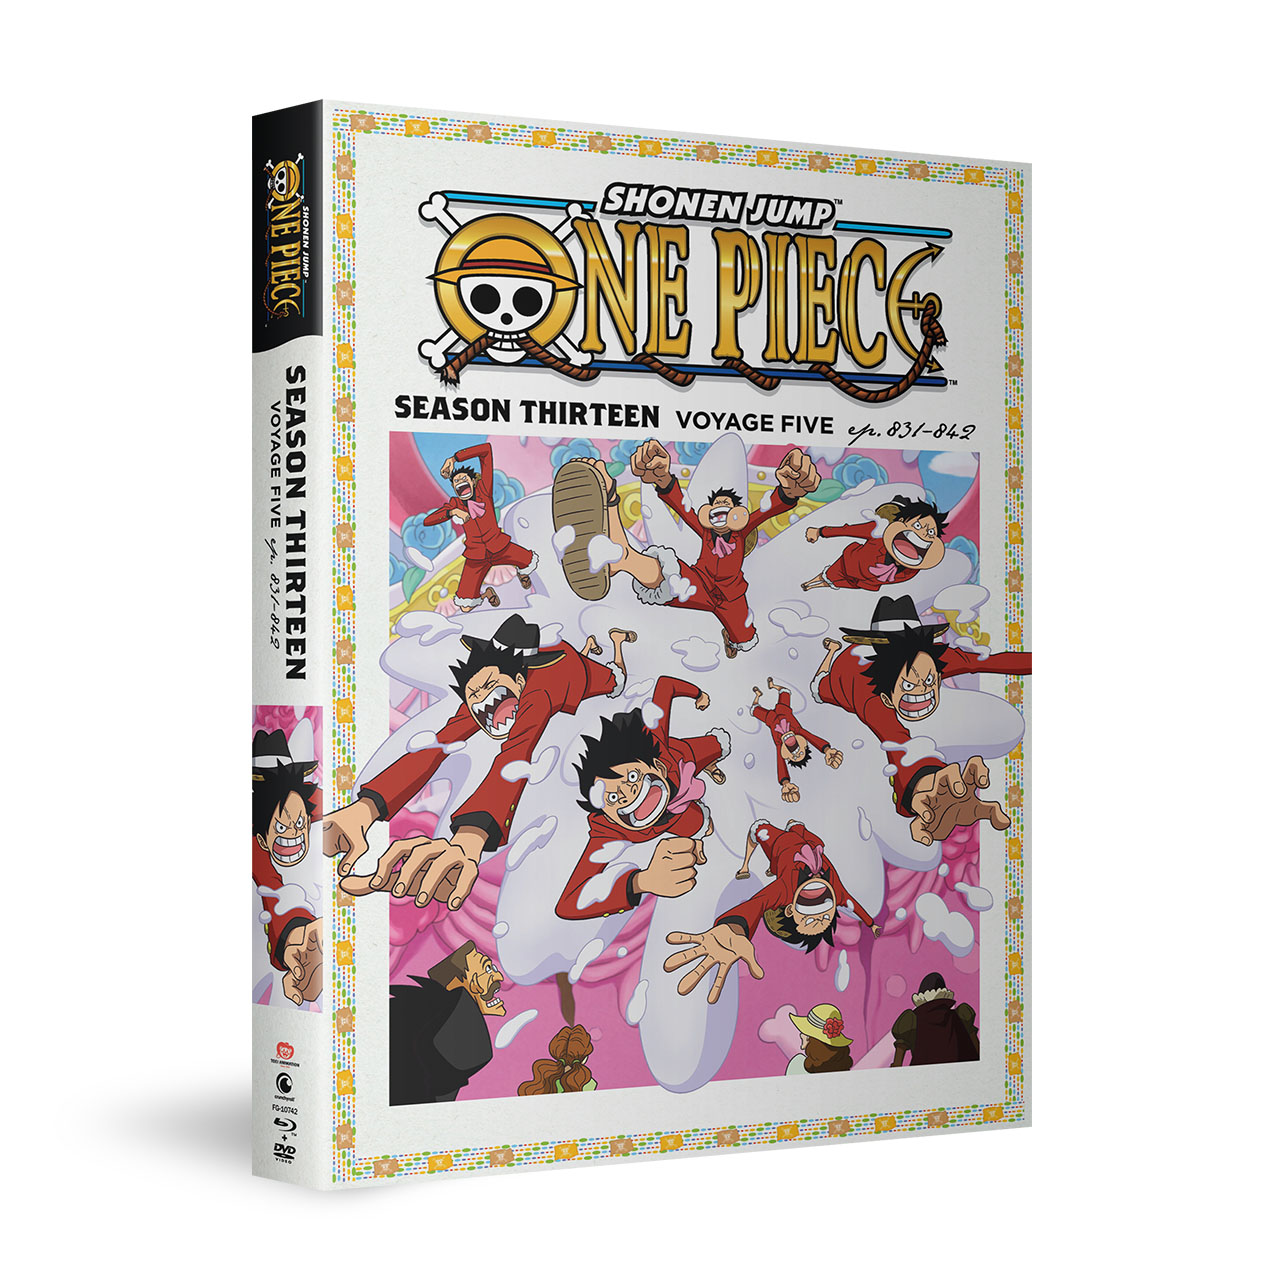 One Piece - Season 13 Voyage 5 - Blu-ray + DVD image count 1